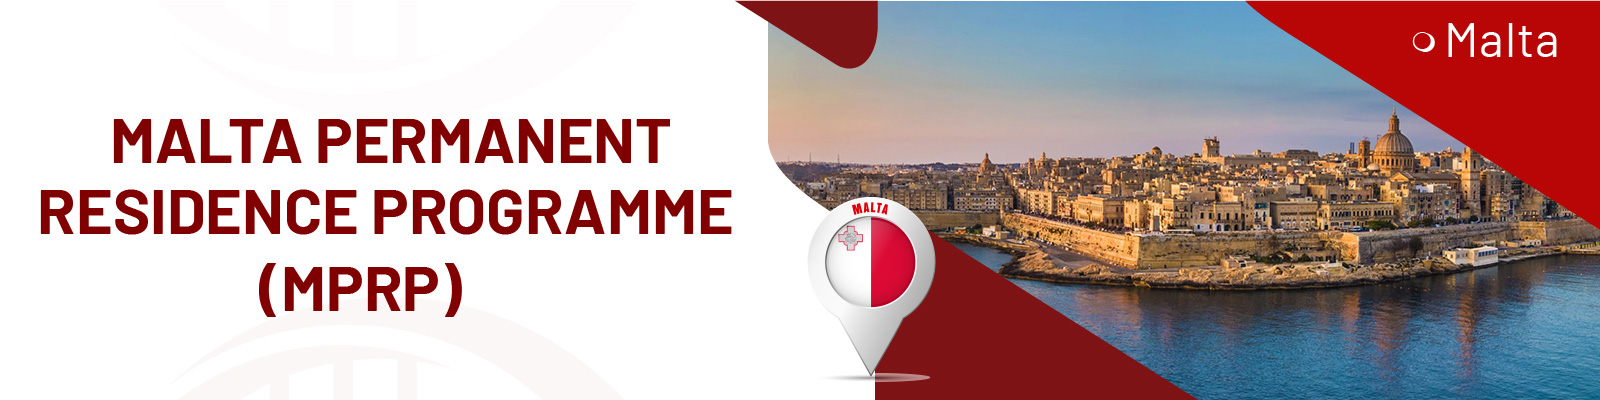 Malta Permanent Residence Program